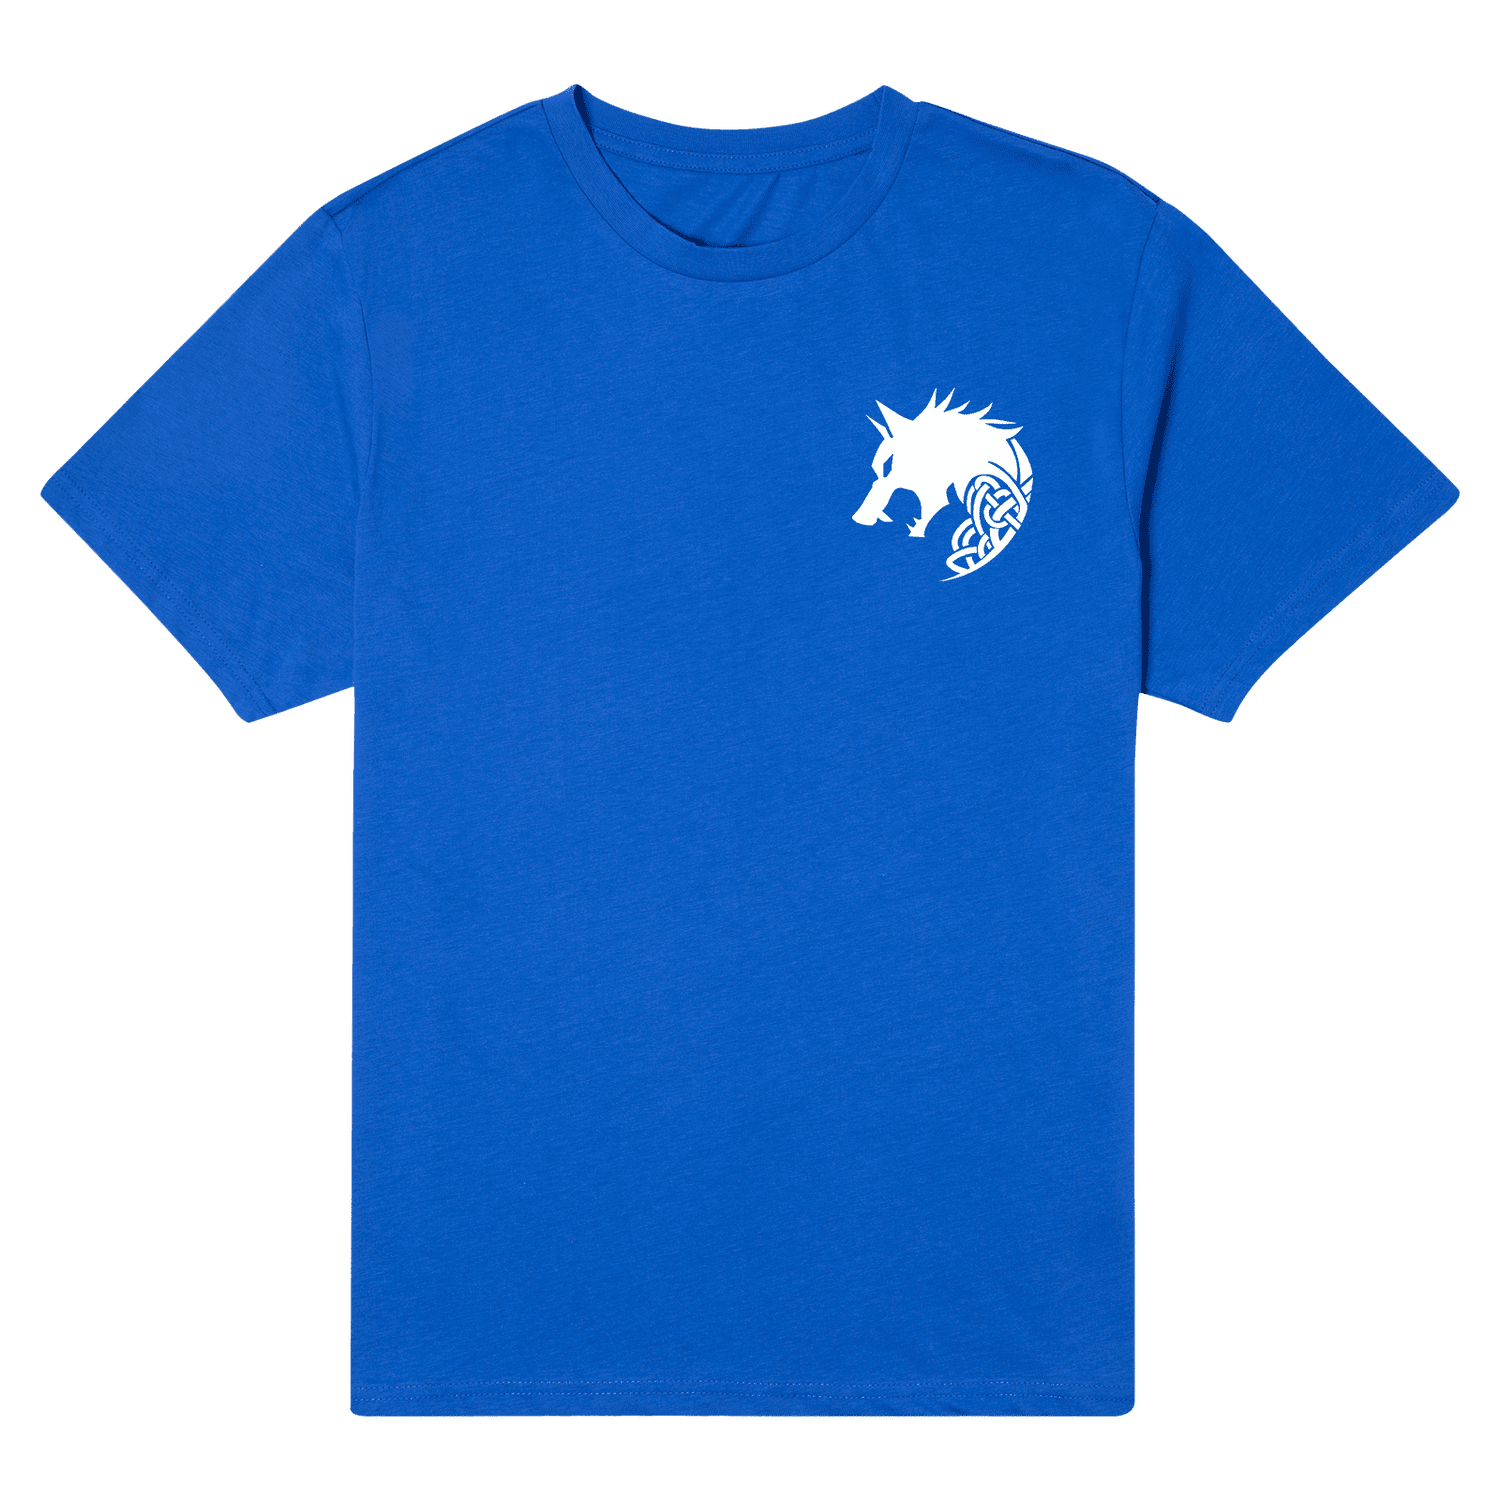 Tribes of Midgard Fenrir Unisex T-Shirt - Blue